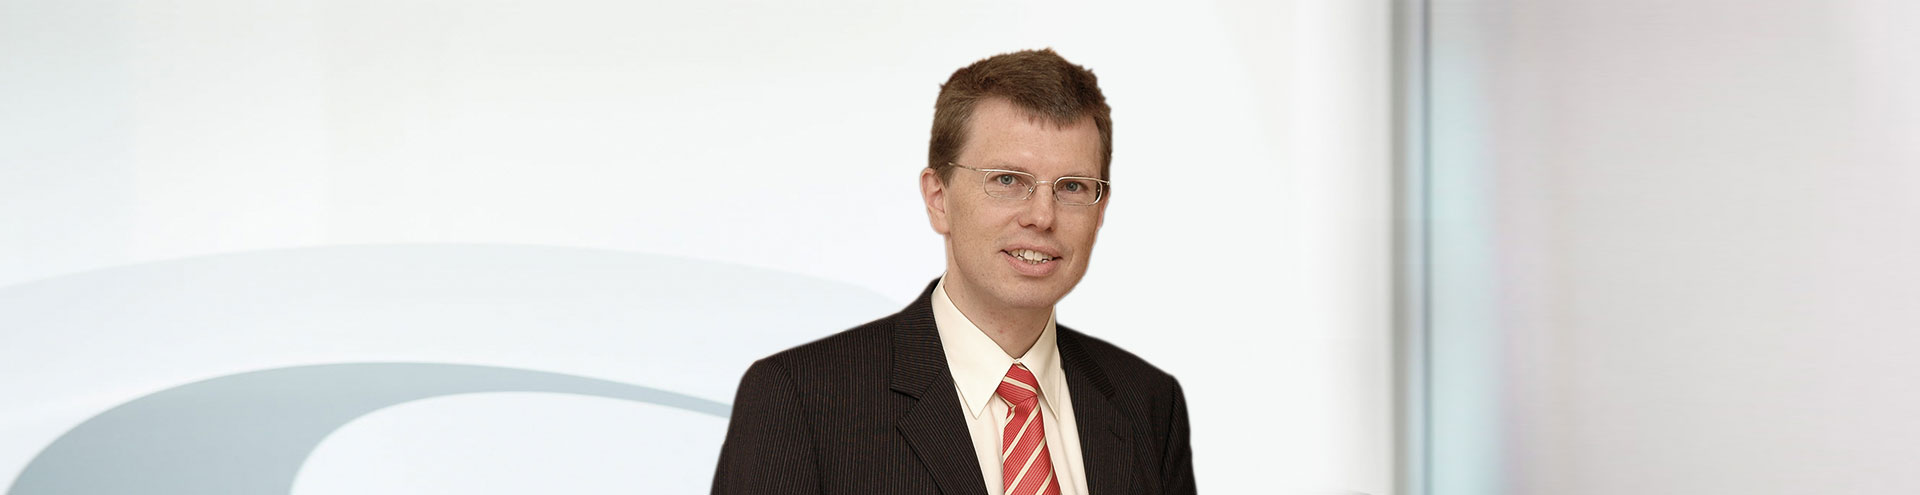 Steuerberater Diplom-Kaufmann Peter Freye